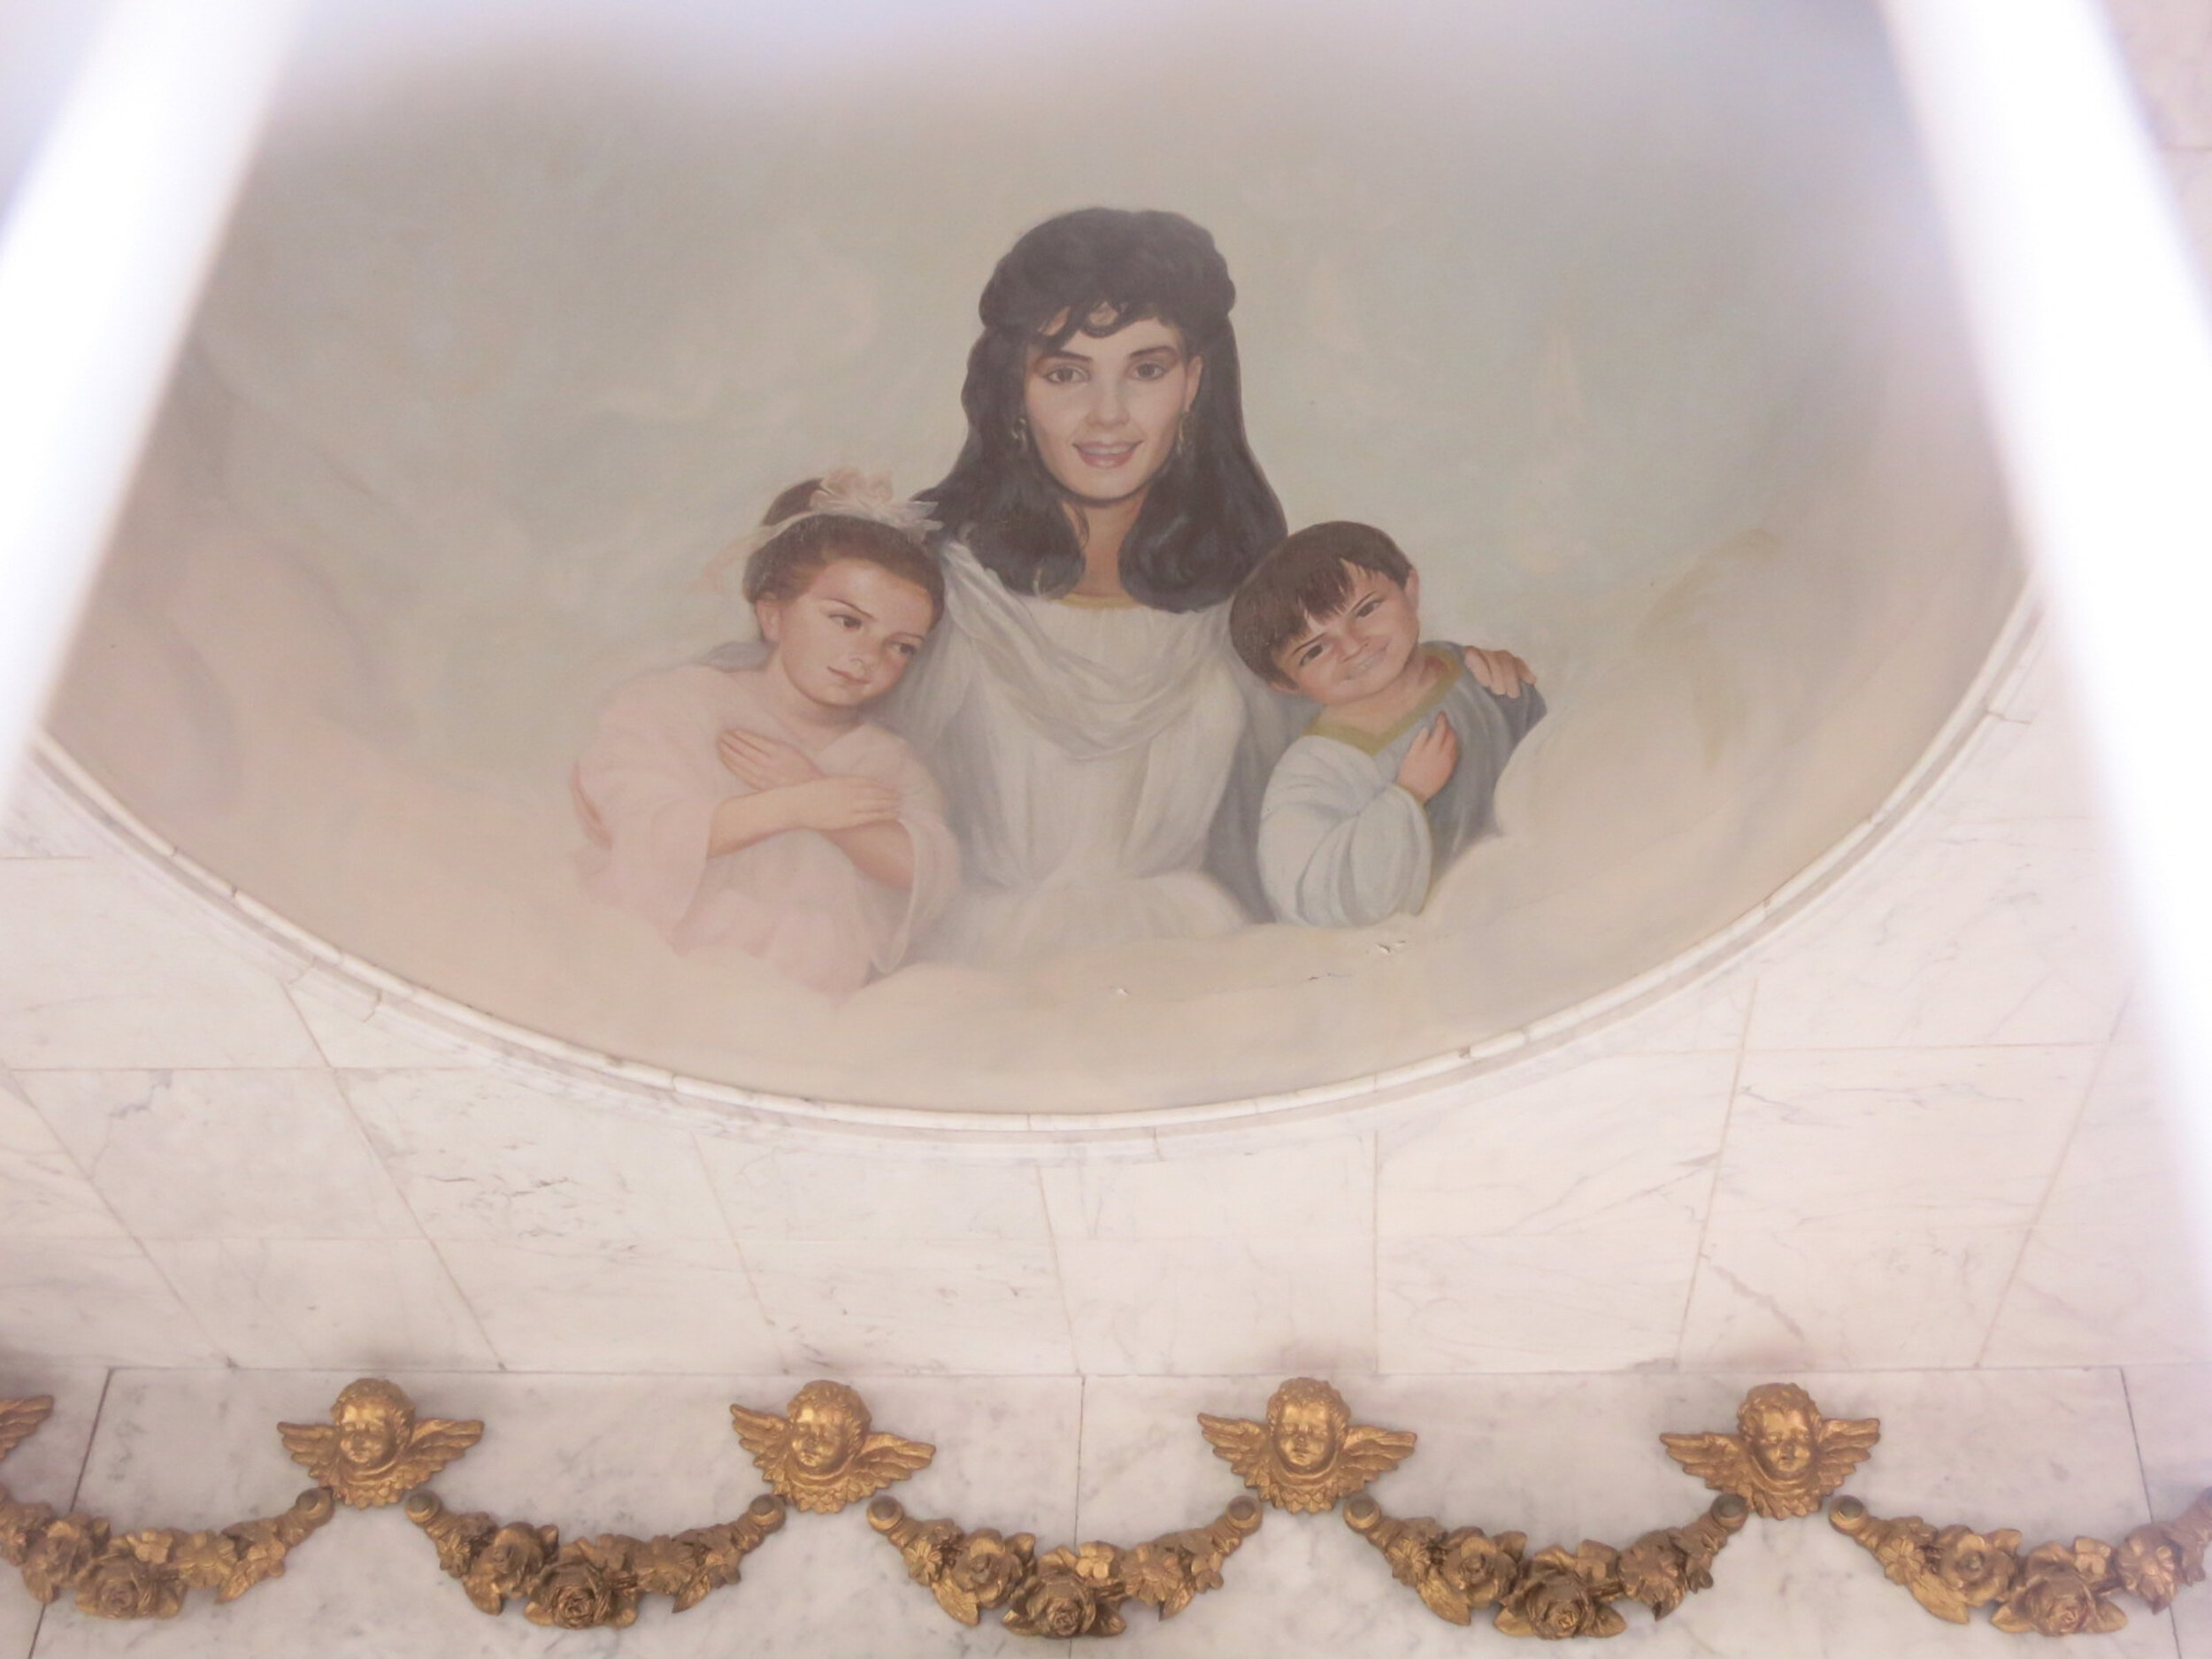 THE WIFE AND KIDS | Tumba de Guadalupe Leija Serrano de Palma | Tomb of El Güero Palma's wife Guadalupe and children